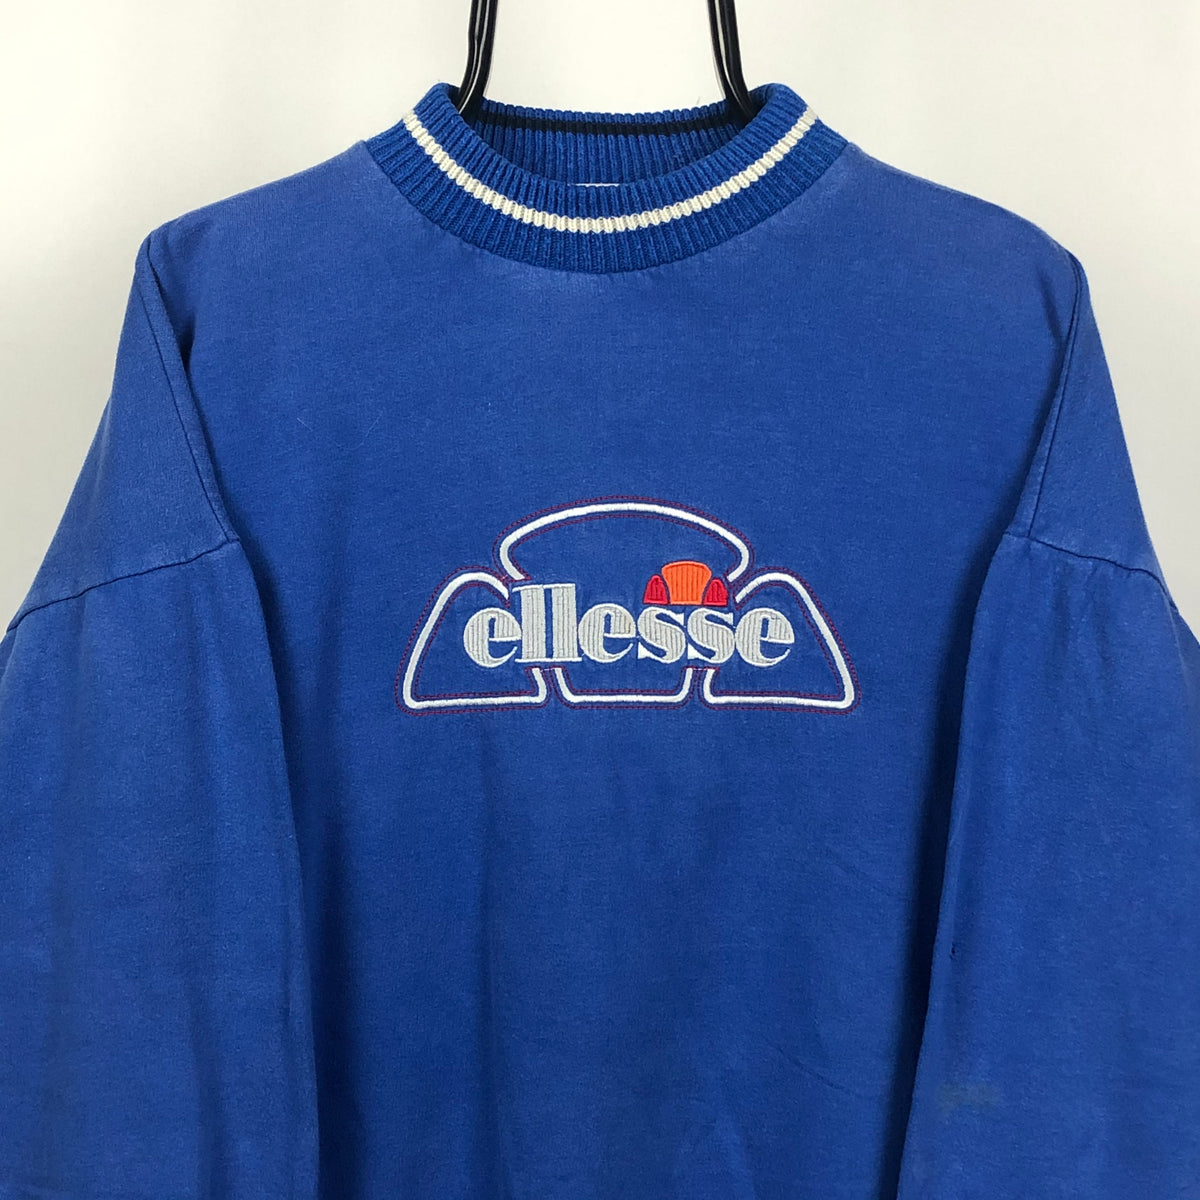 Vintage Ellesse Spellout Sweatshirt in Blue - Men's Medium/Women's Lar ...